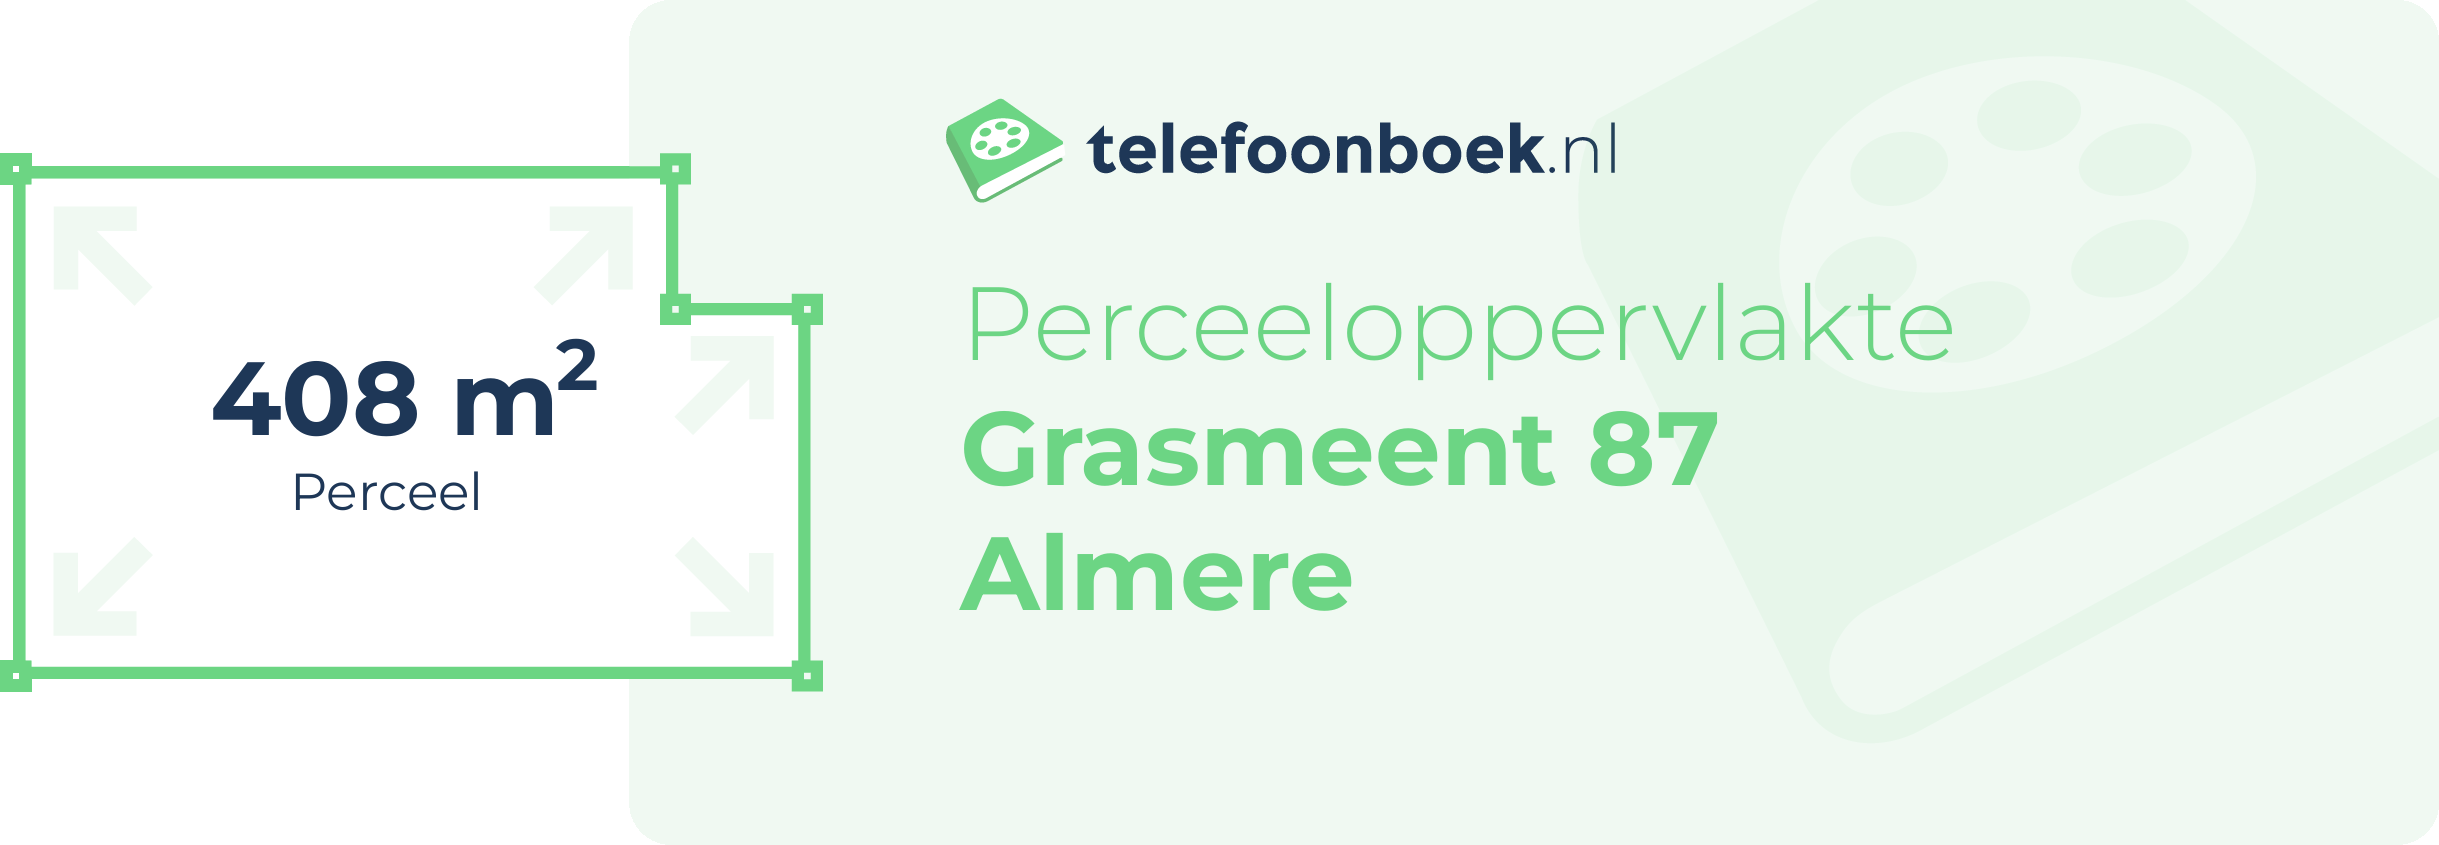 Perceeloppervlakte Grasmeent 87 Almere